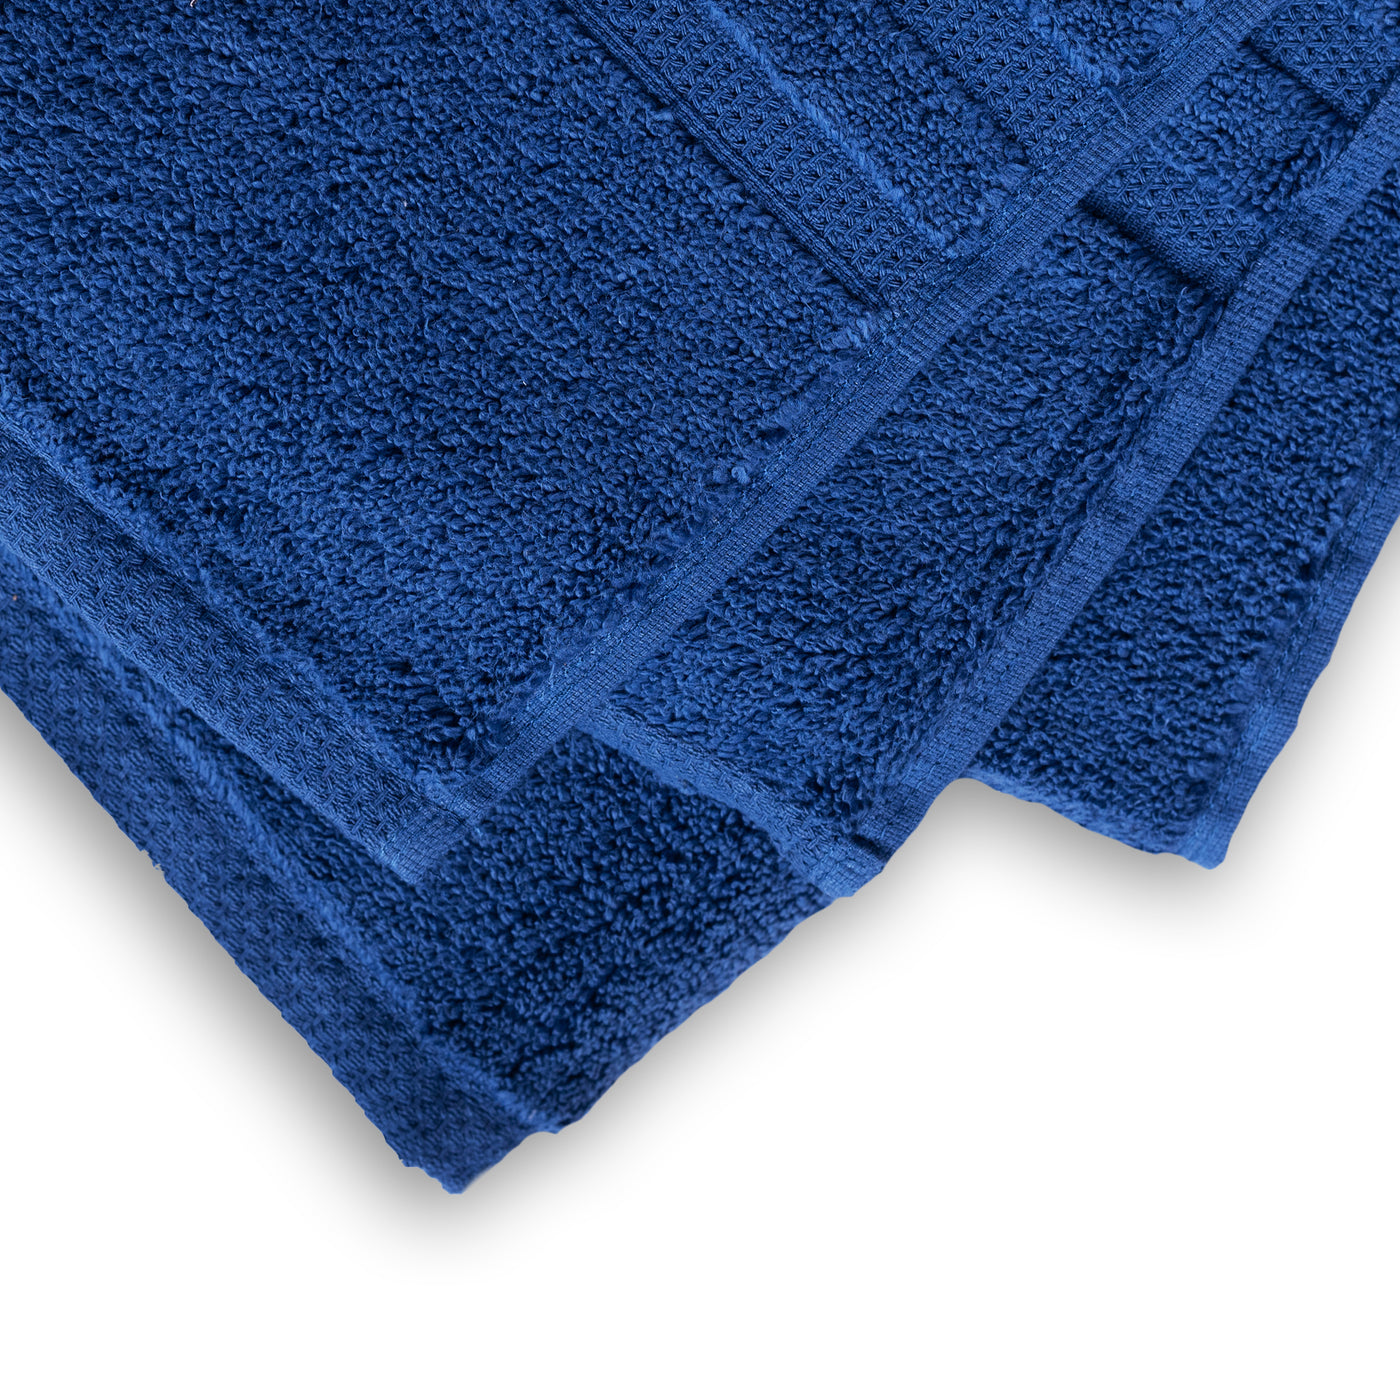 Luxe Fibrosoft Towels (Royal Blue)